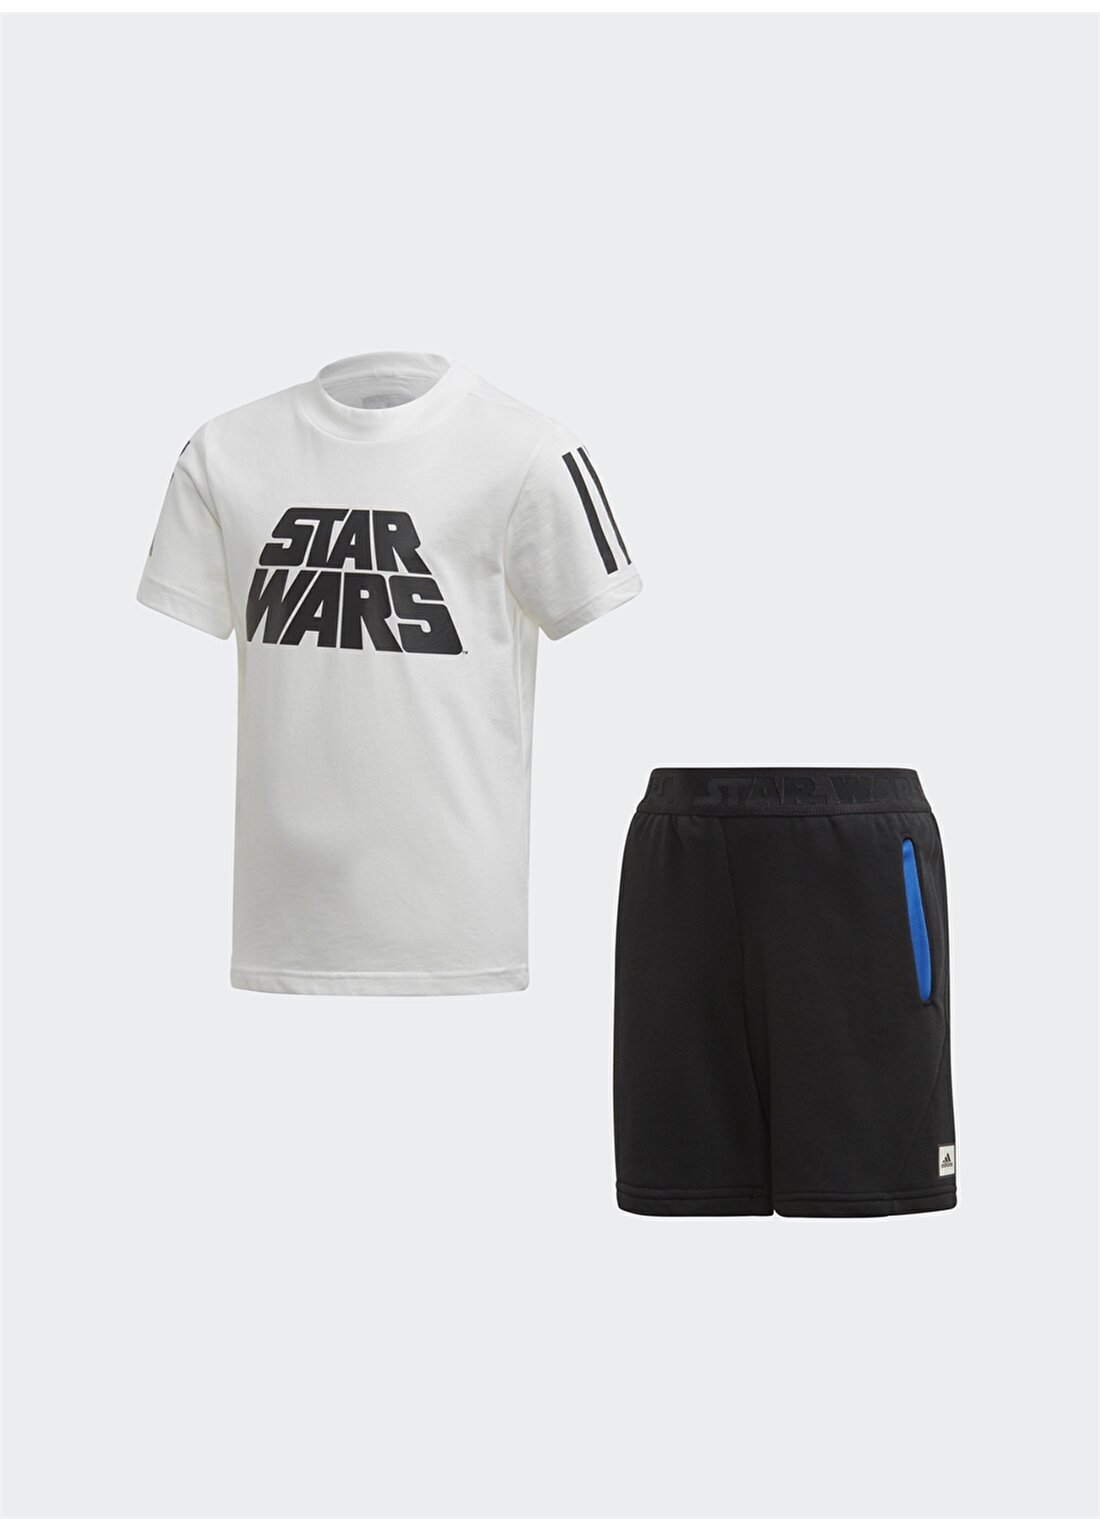 Adidas FM2869 Star Wars Summer Set Erkek Çocuk Eşofman Takımı